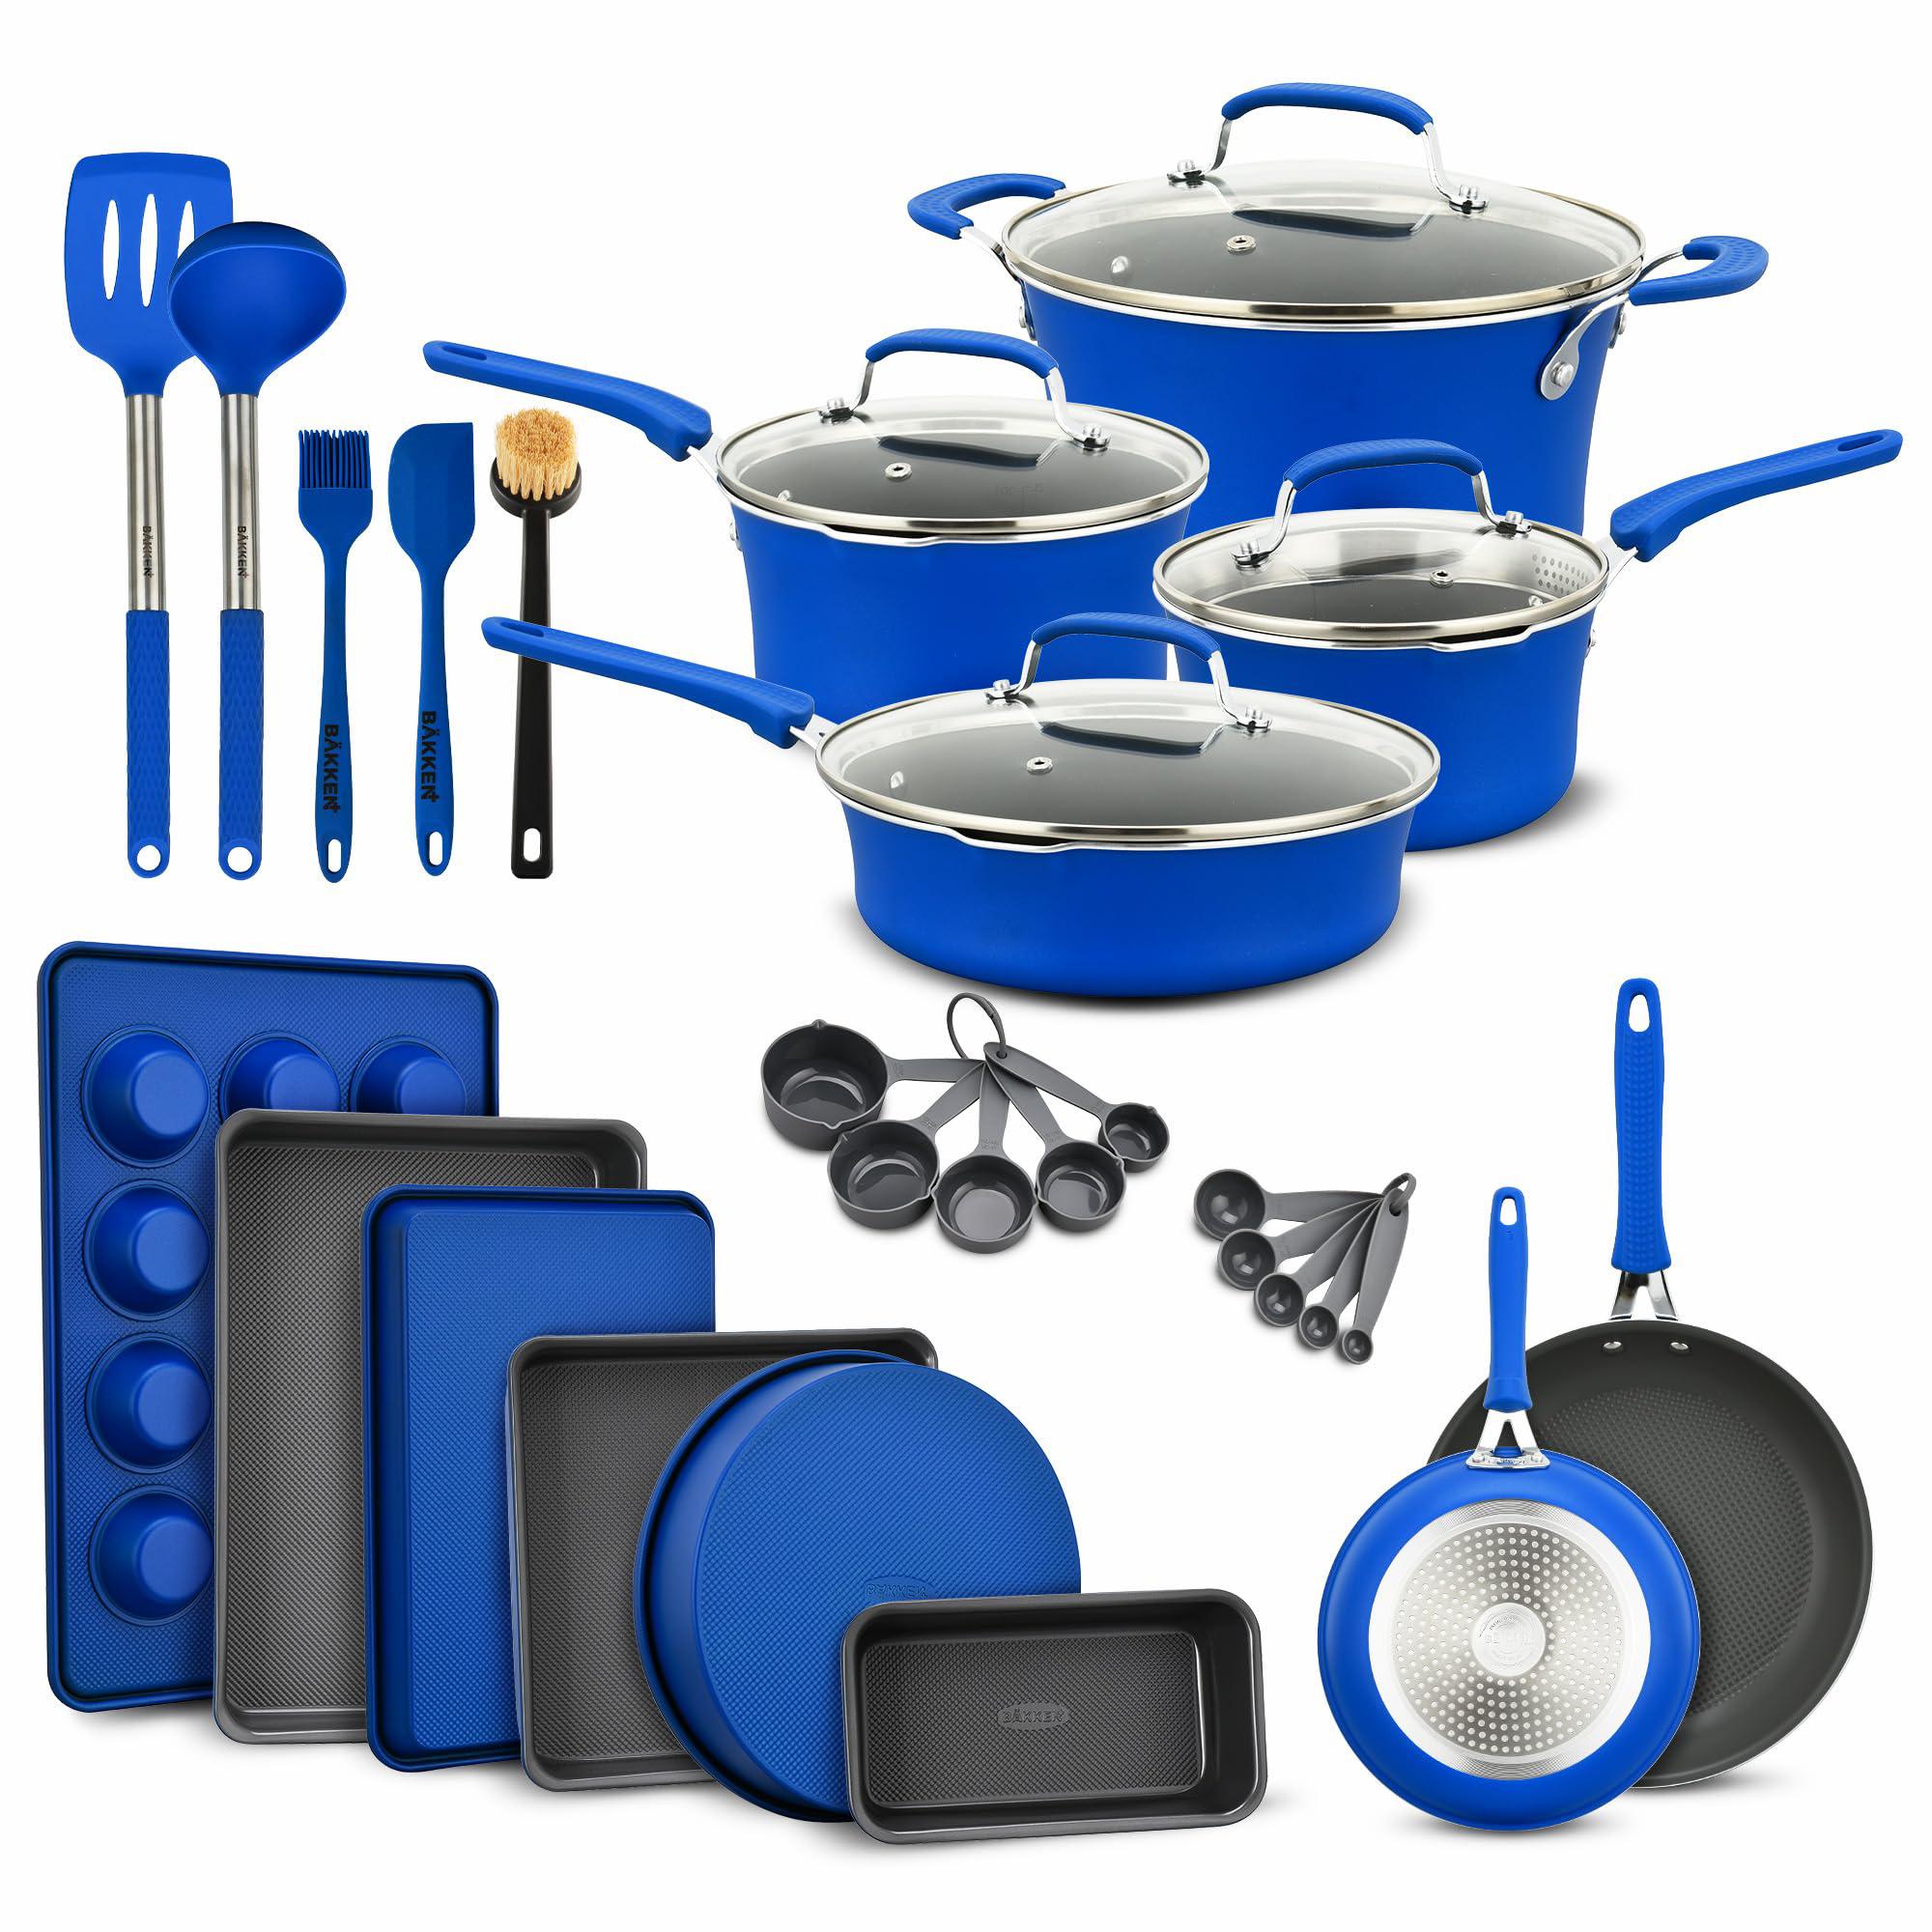 bakken- swiss cookware set - 23 piece -blue multi-sized cooking pots with  lids, skillet fry pans and bakeware - reinforced pressed aluminum